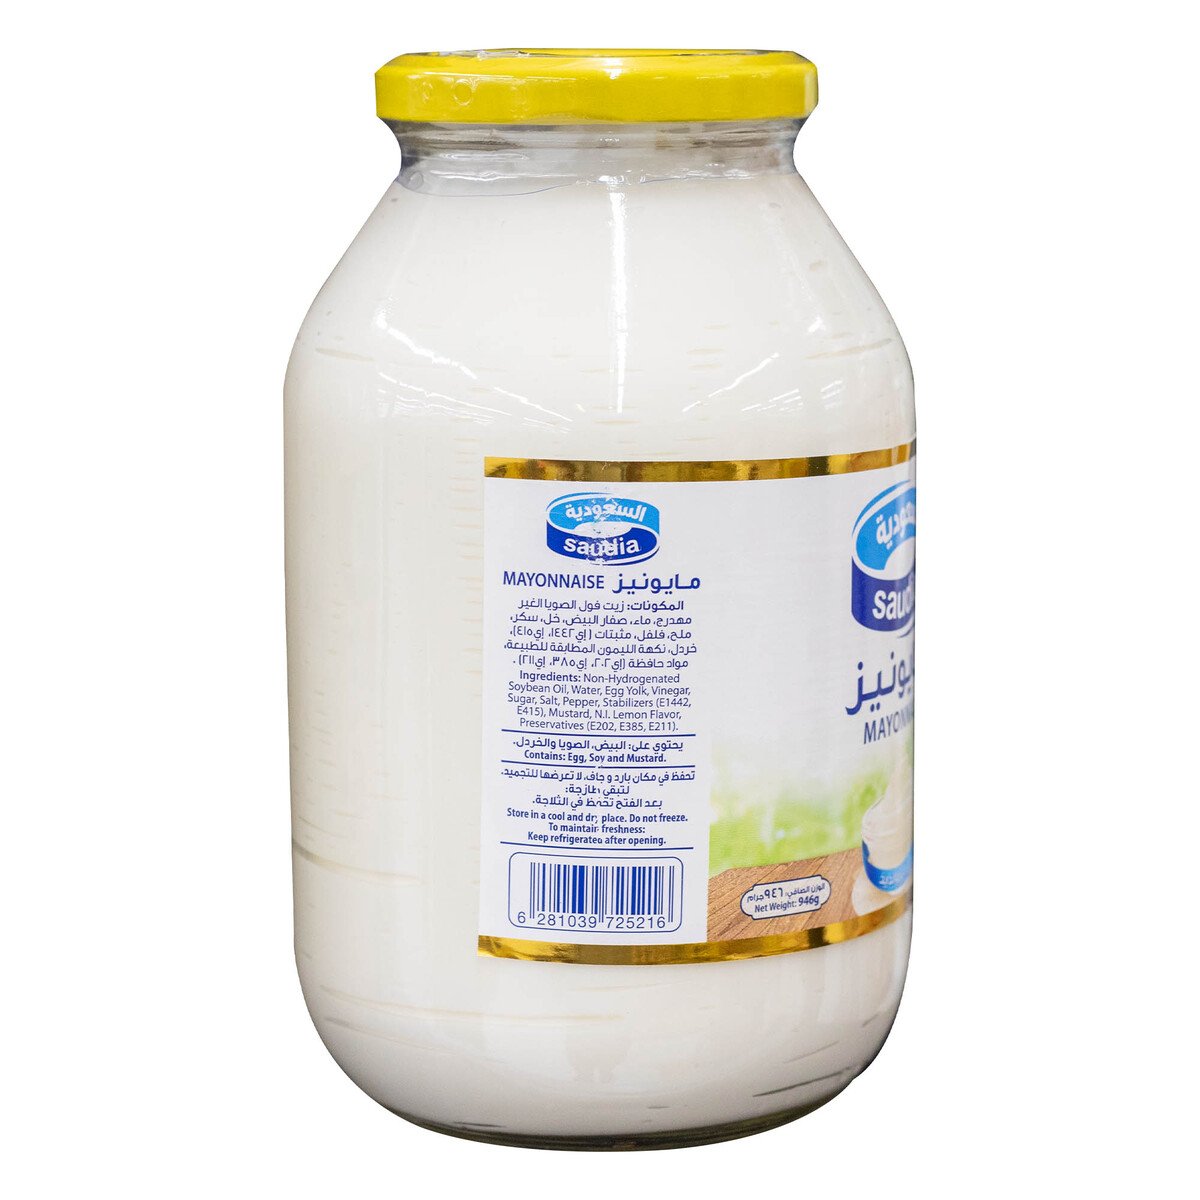 Saudia Mayonnaise Glass Jar 946 g